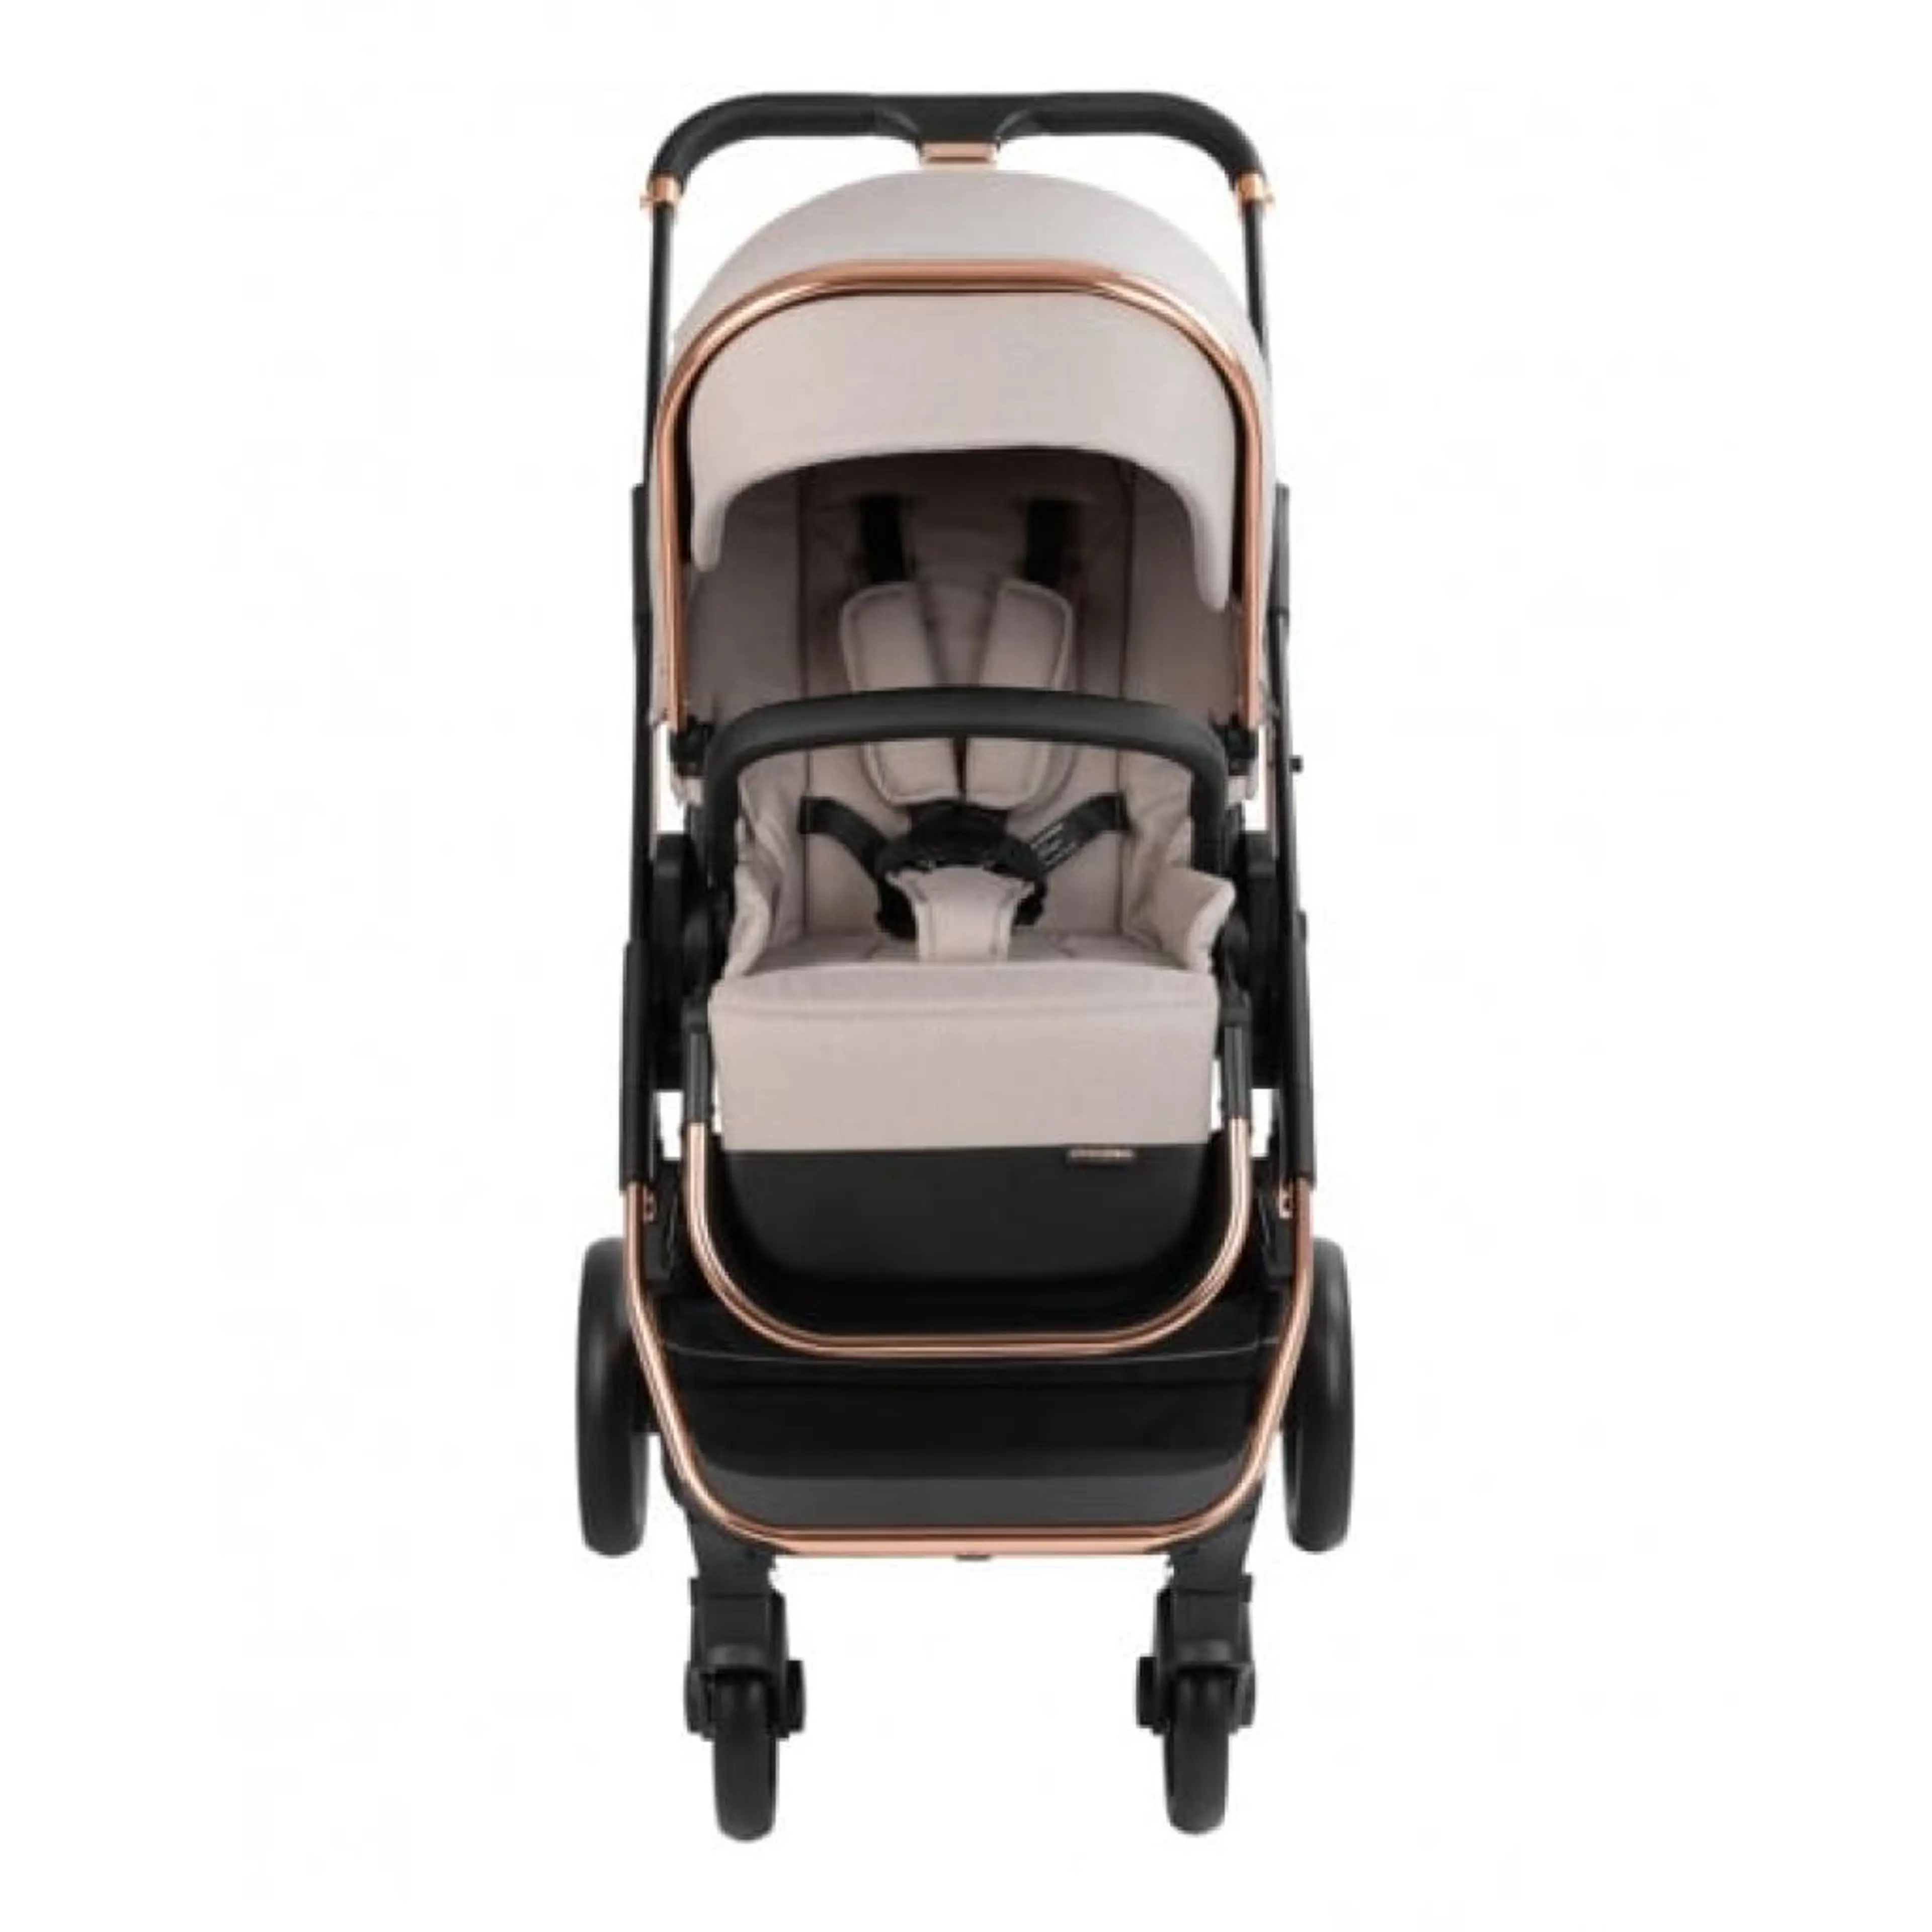 Комбинирана бебешка количка 3 в 1 Angele Chrome, бежова